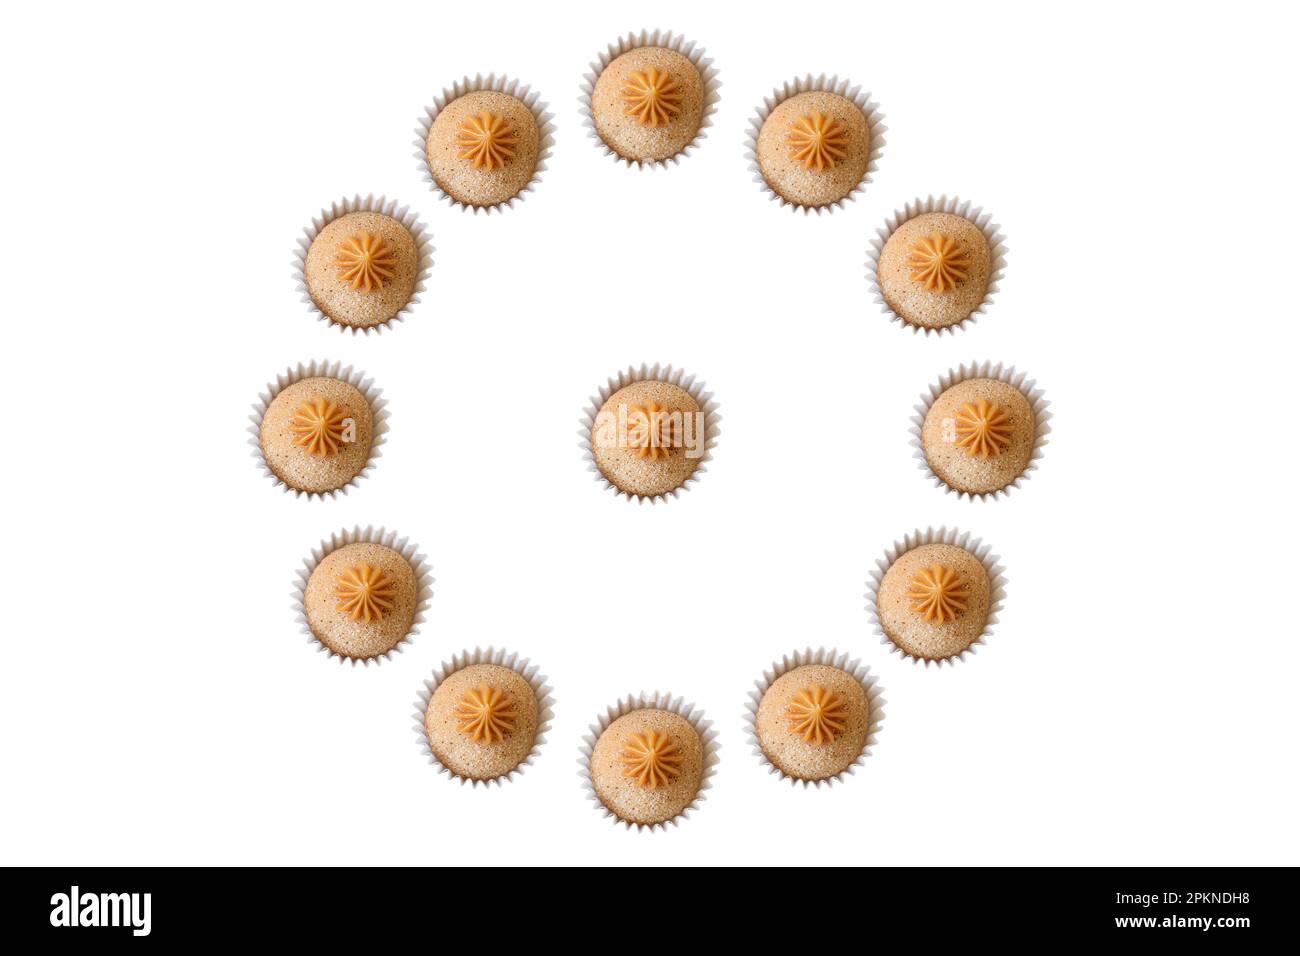 Brazilian fudge balls of churros arranged in a circular shape. Stock Photo